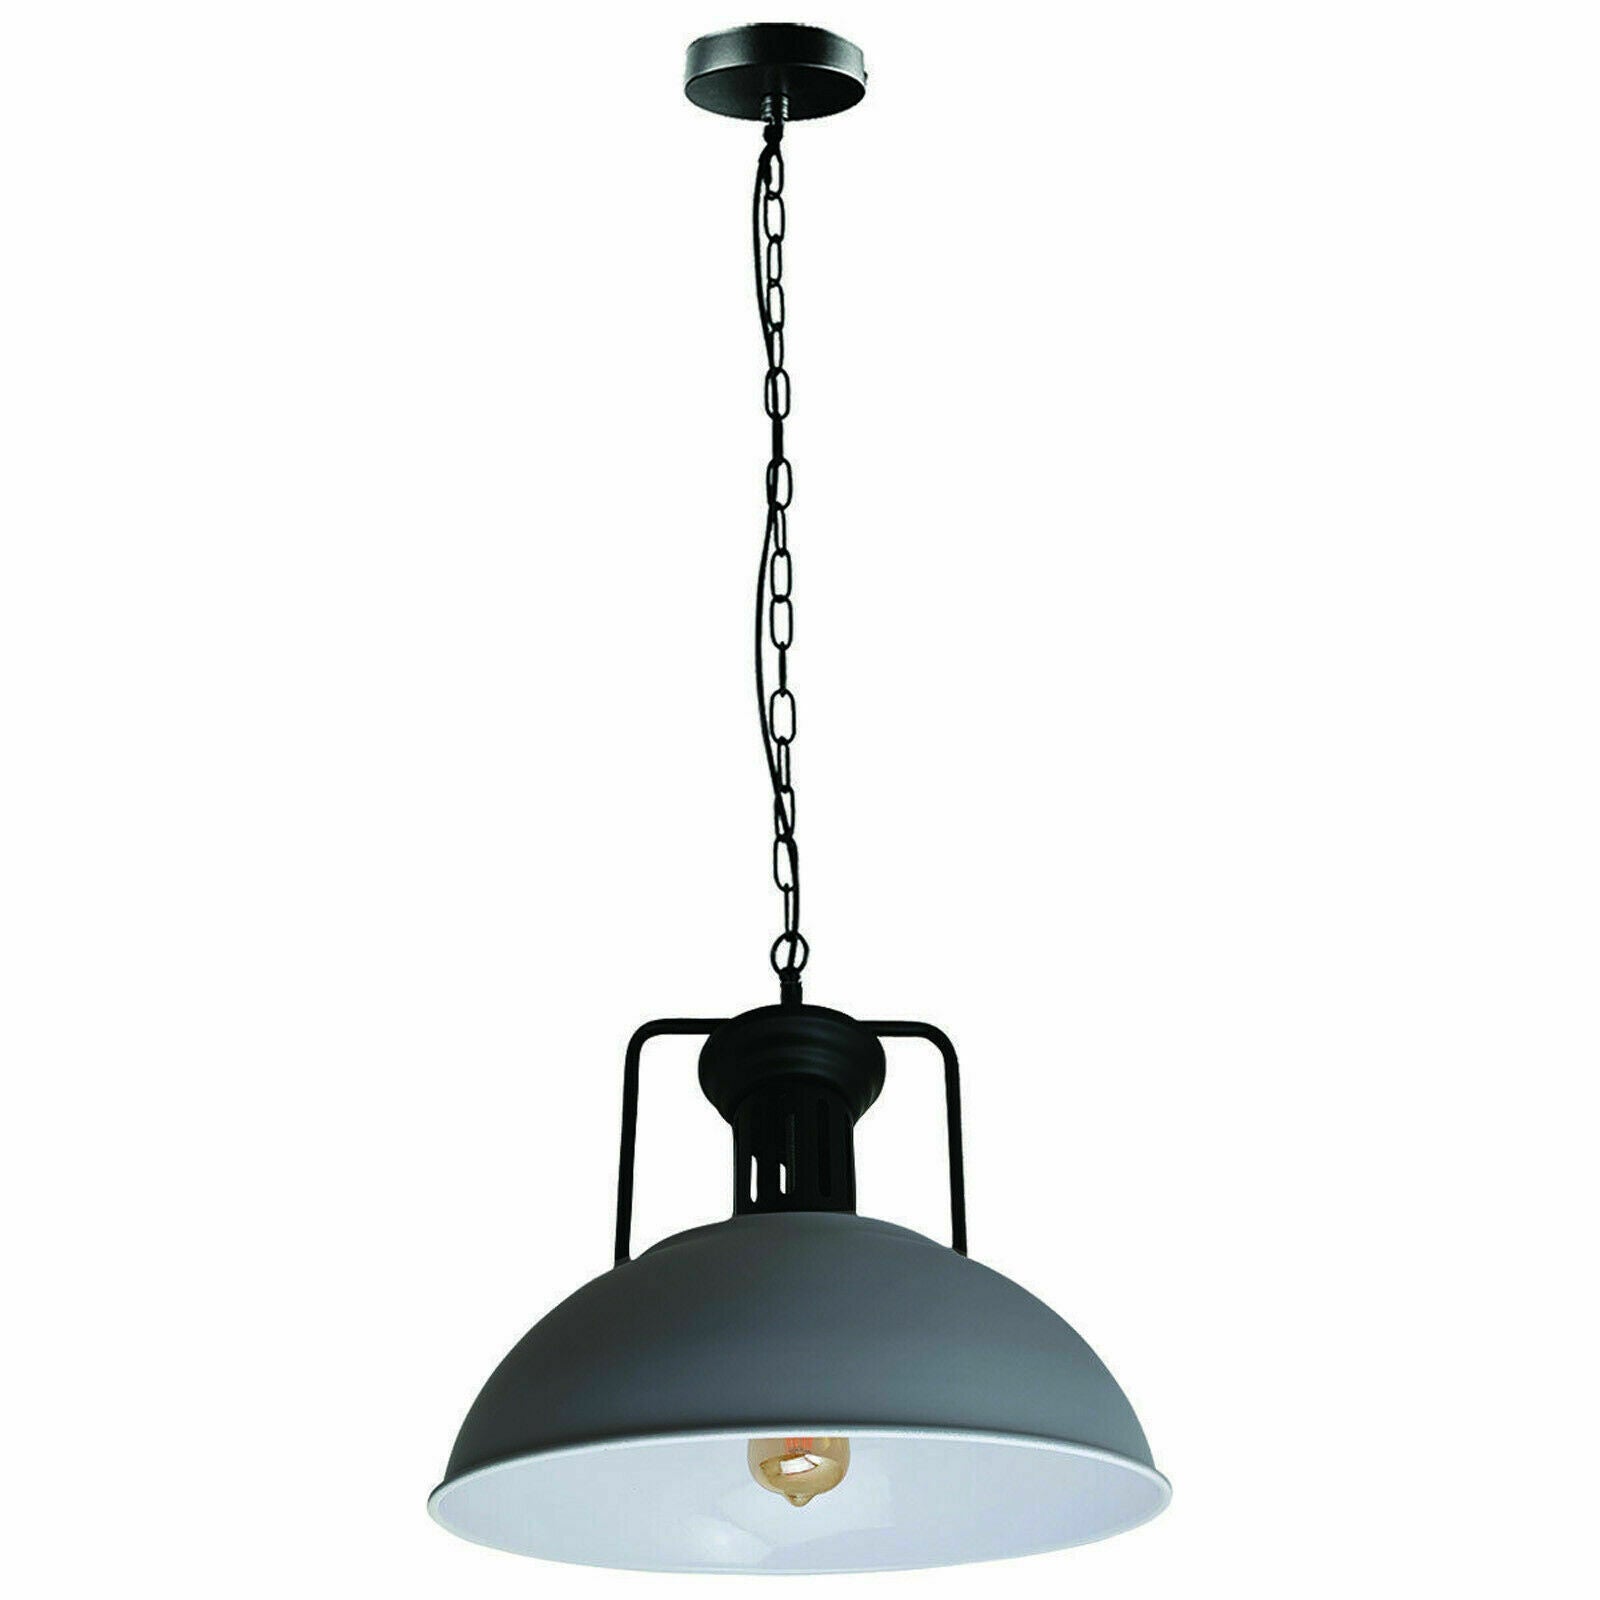 Industrial Metal Pendant Lighting E27 Adjustable Ceiling Hanging Light Fixtures with Metal Lampshades for Kitchen Bedroom Hallway Island Lights